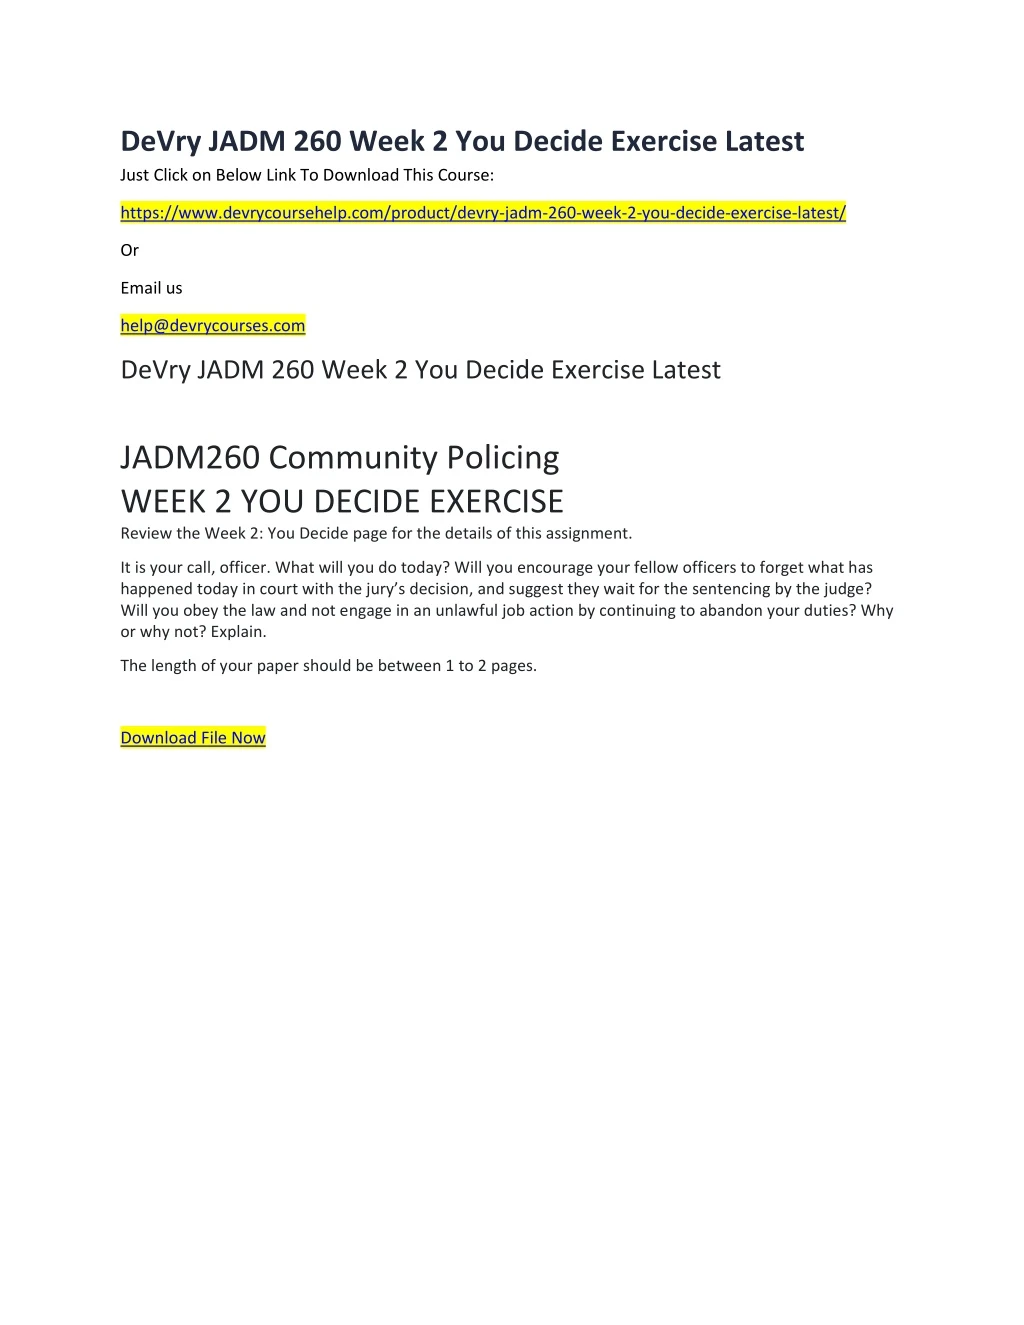 devry jadm 260 week 2 you decide exercise latest